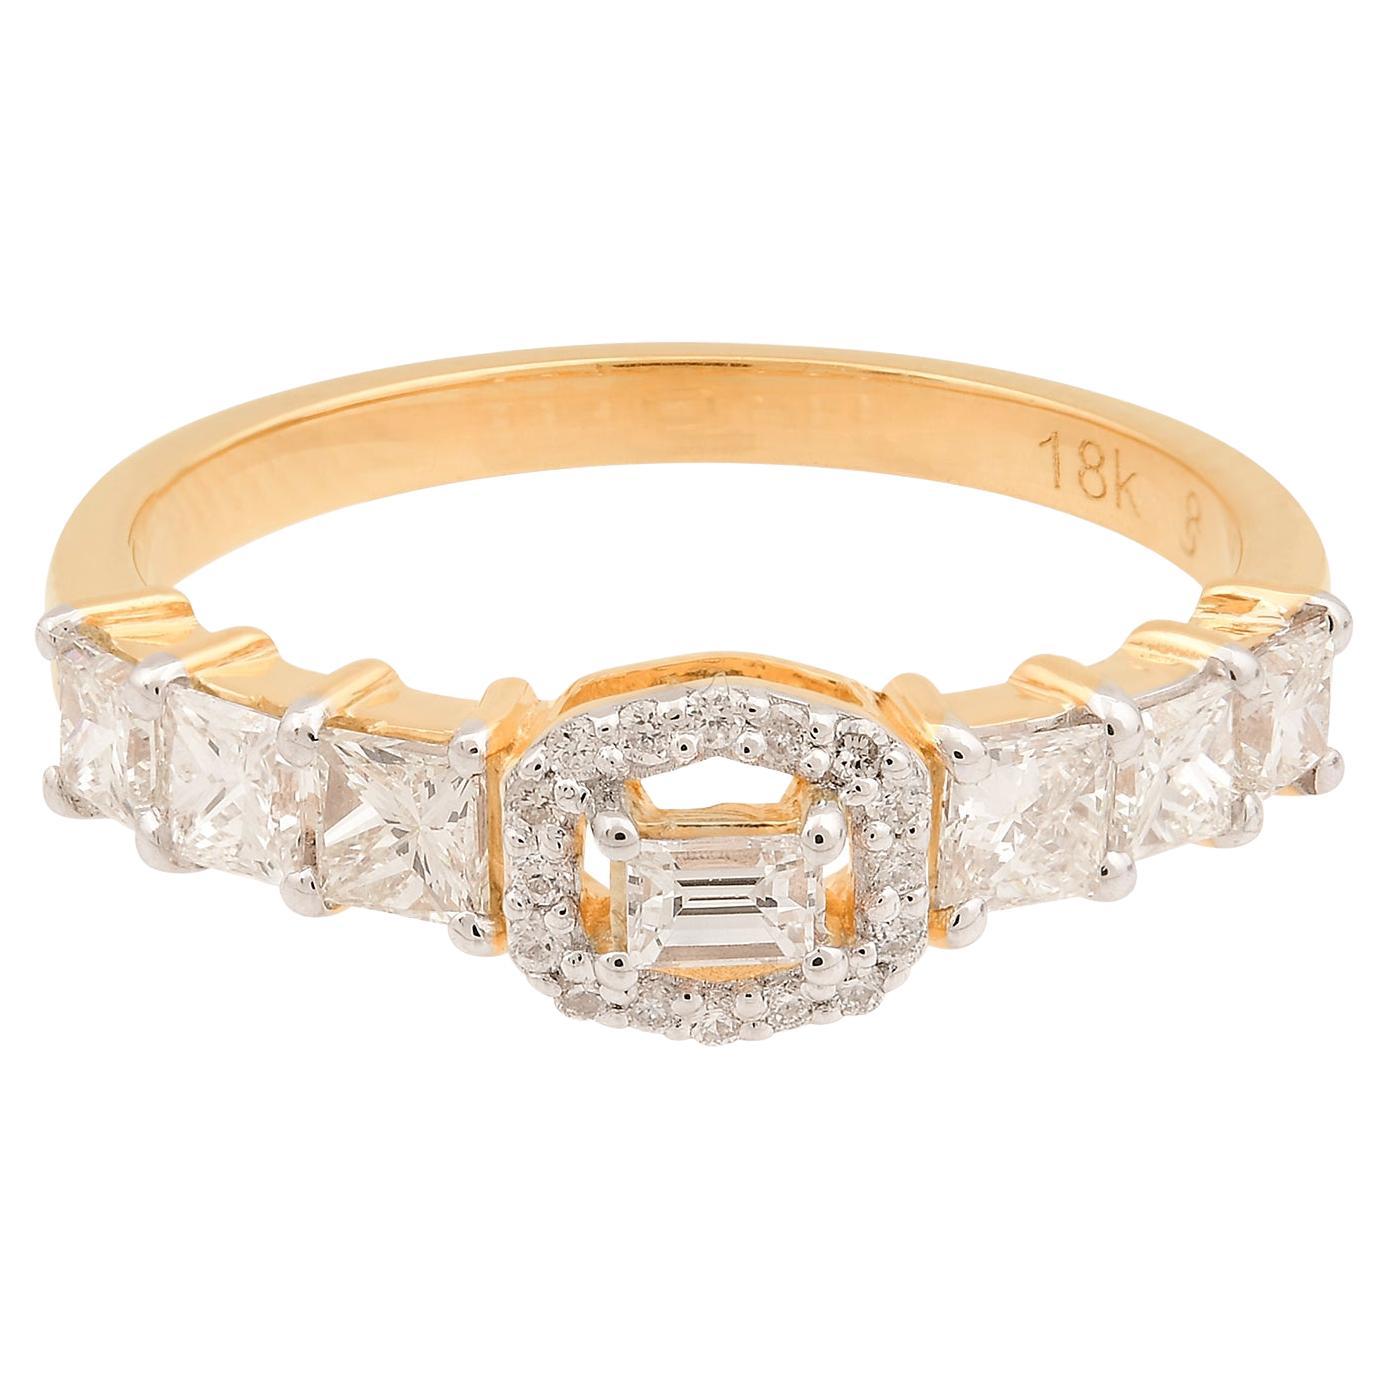 0.8 Carat Round Baguette Princess Cut Diamond Ring 14 Karat Yellow Gold Jewelry